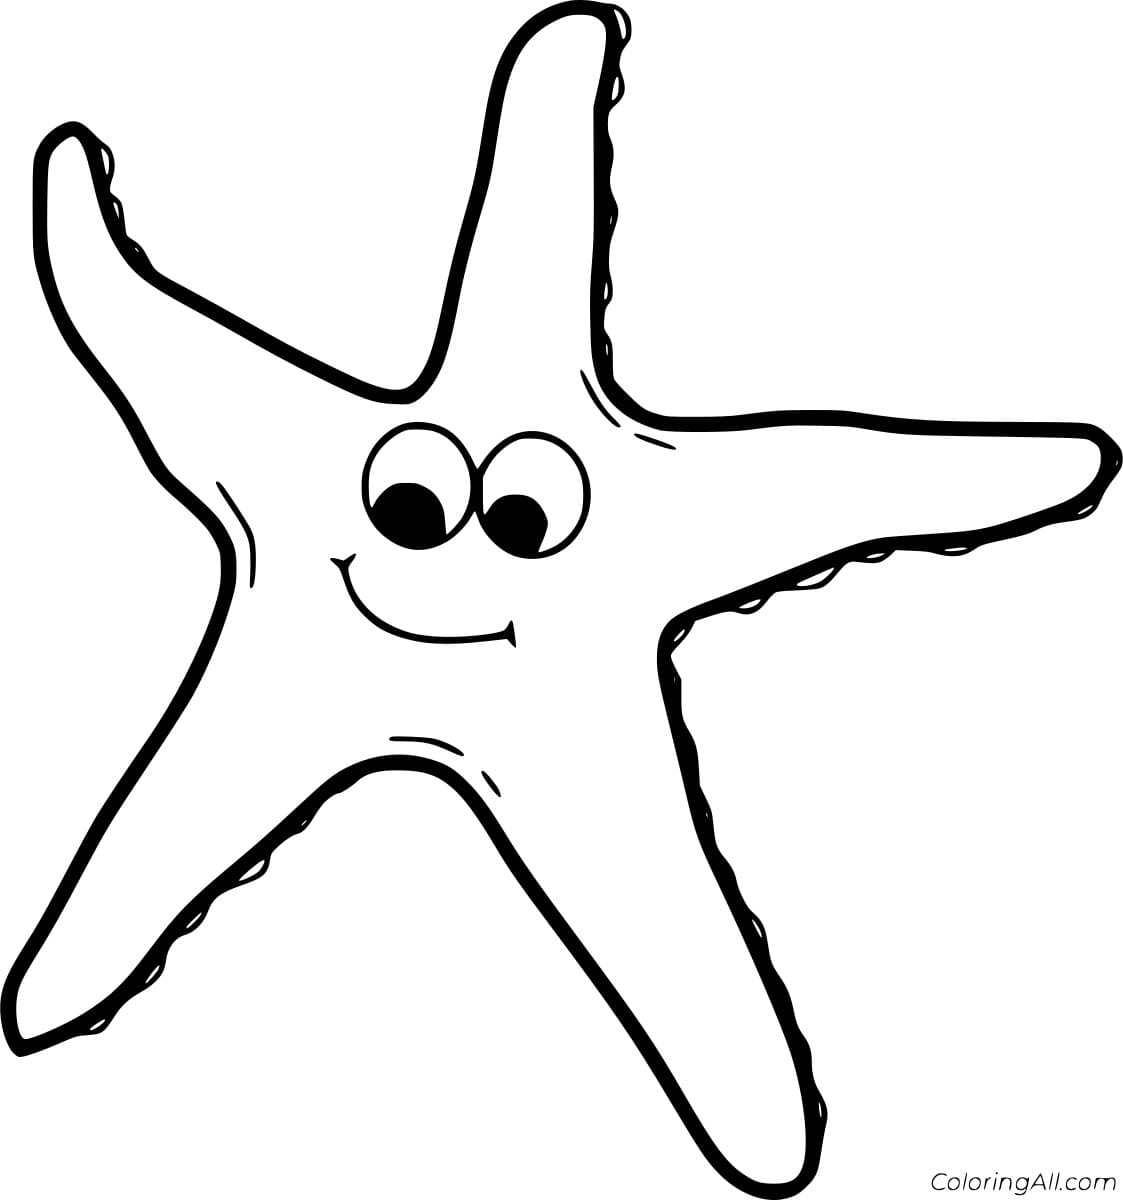 Dancing Starfish Image